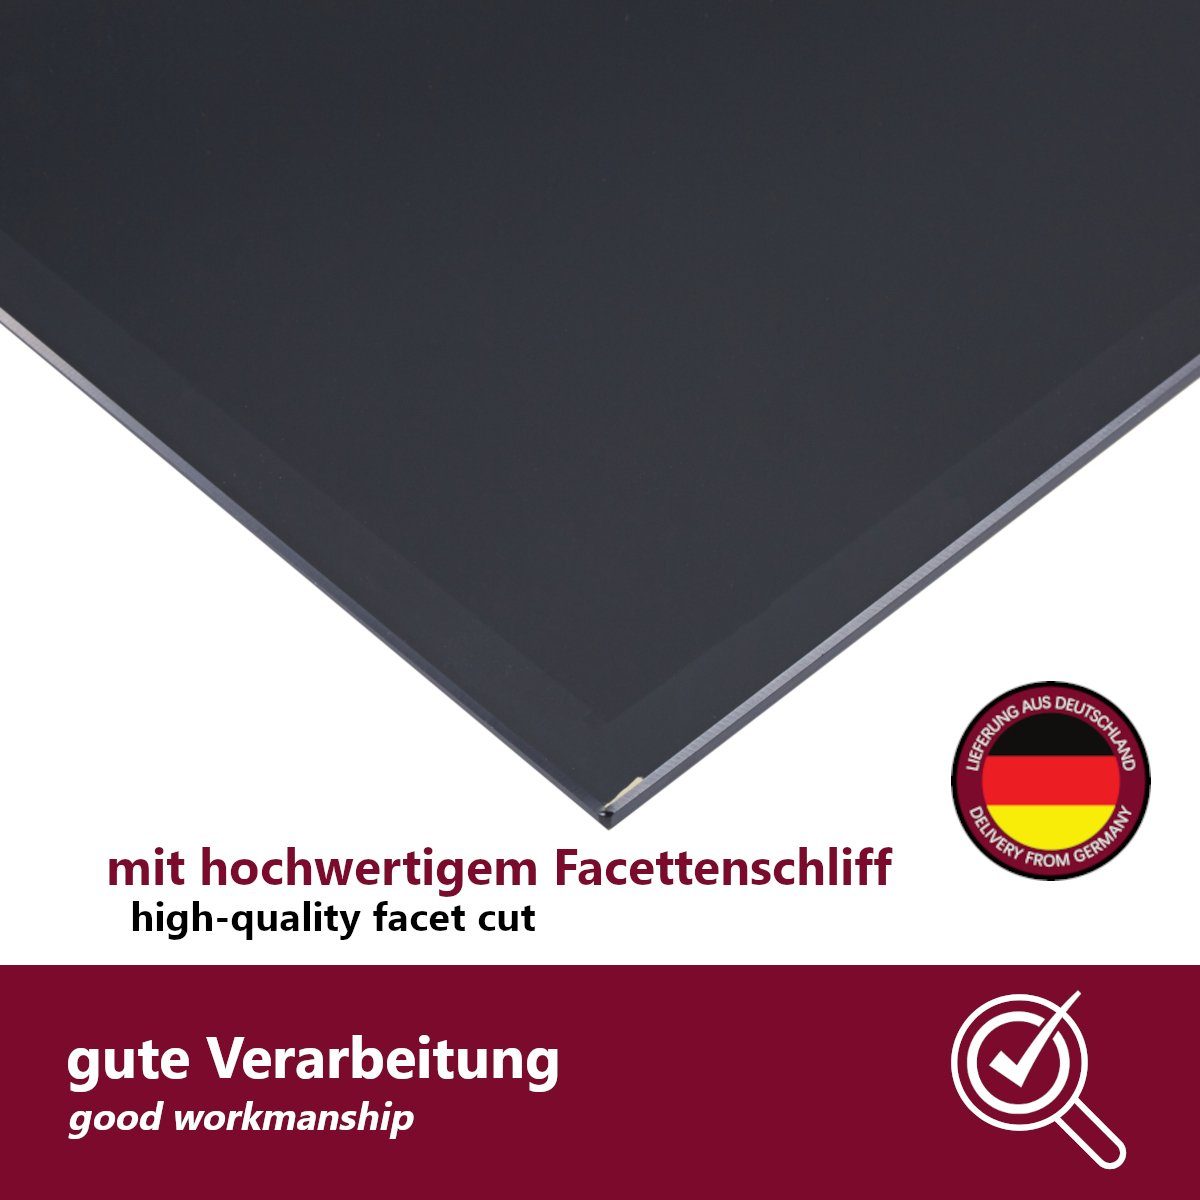 schwarz Glasplatte HOOZ Tisch, 80x80 cm Tischplatte DIY Kaminglas quadratisch